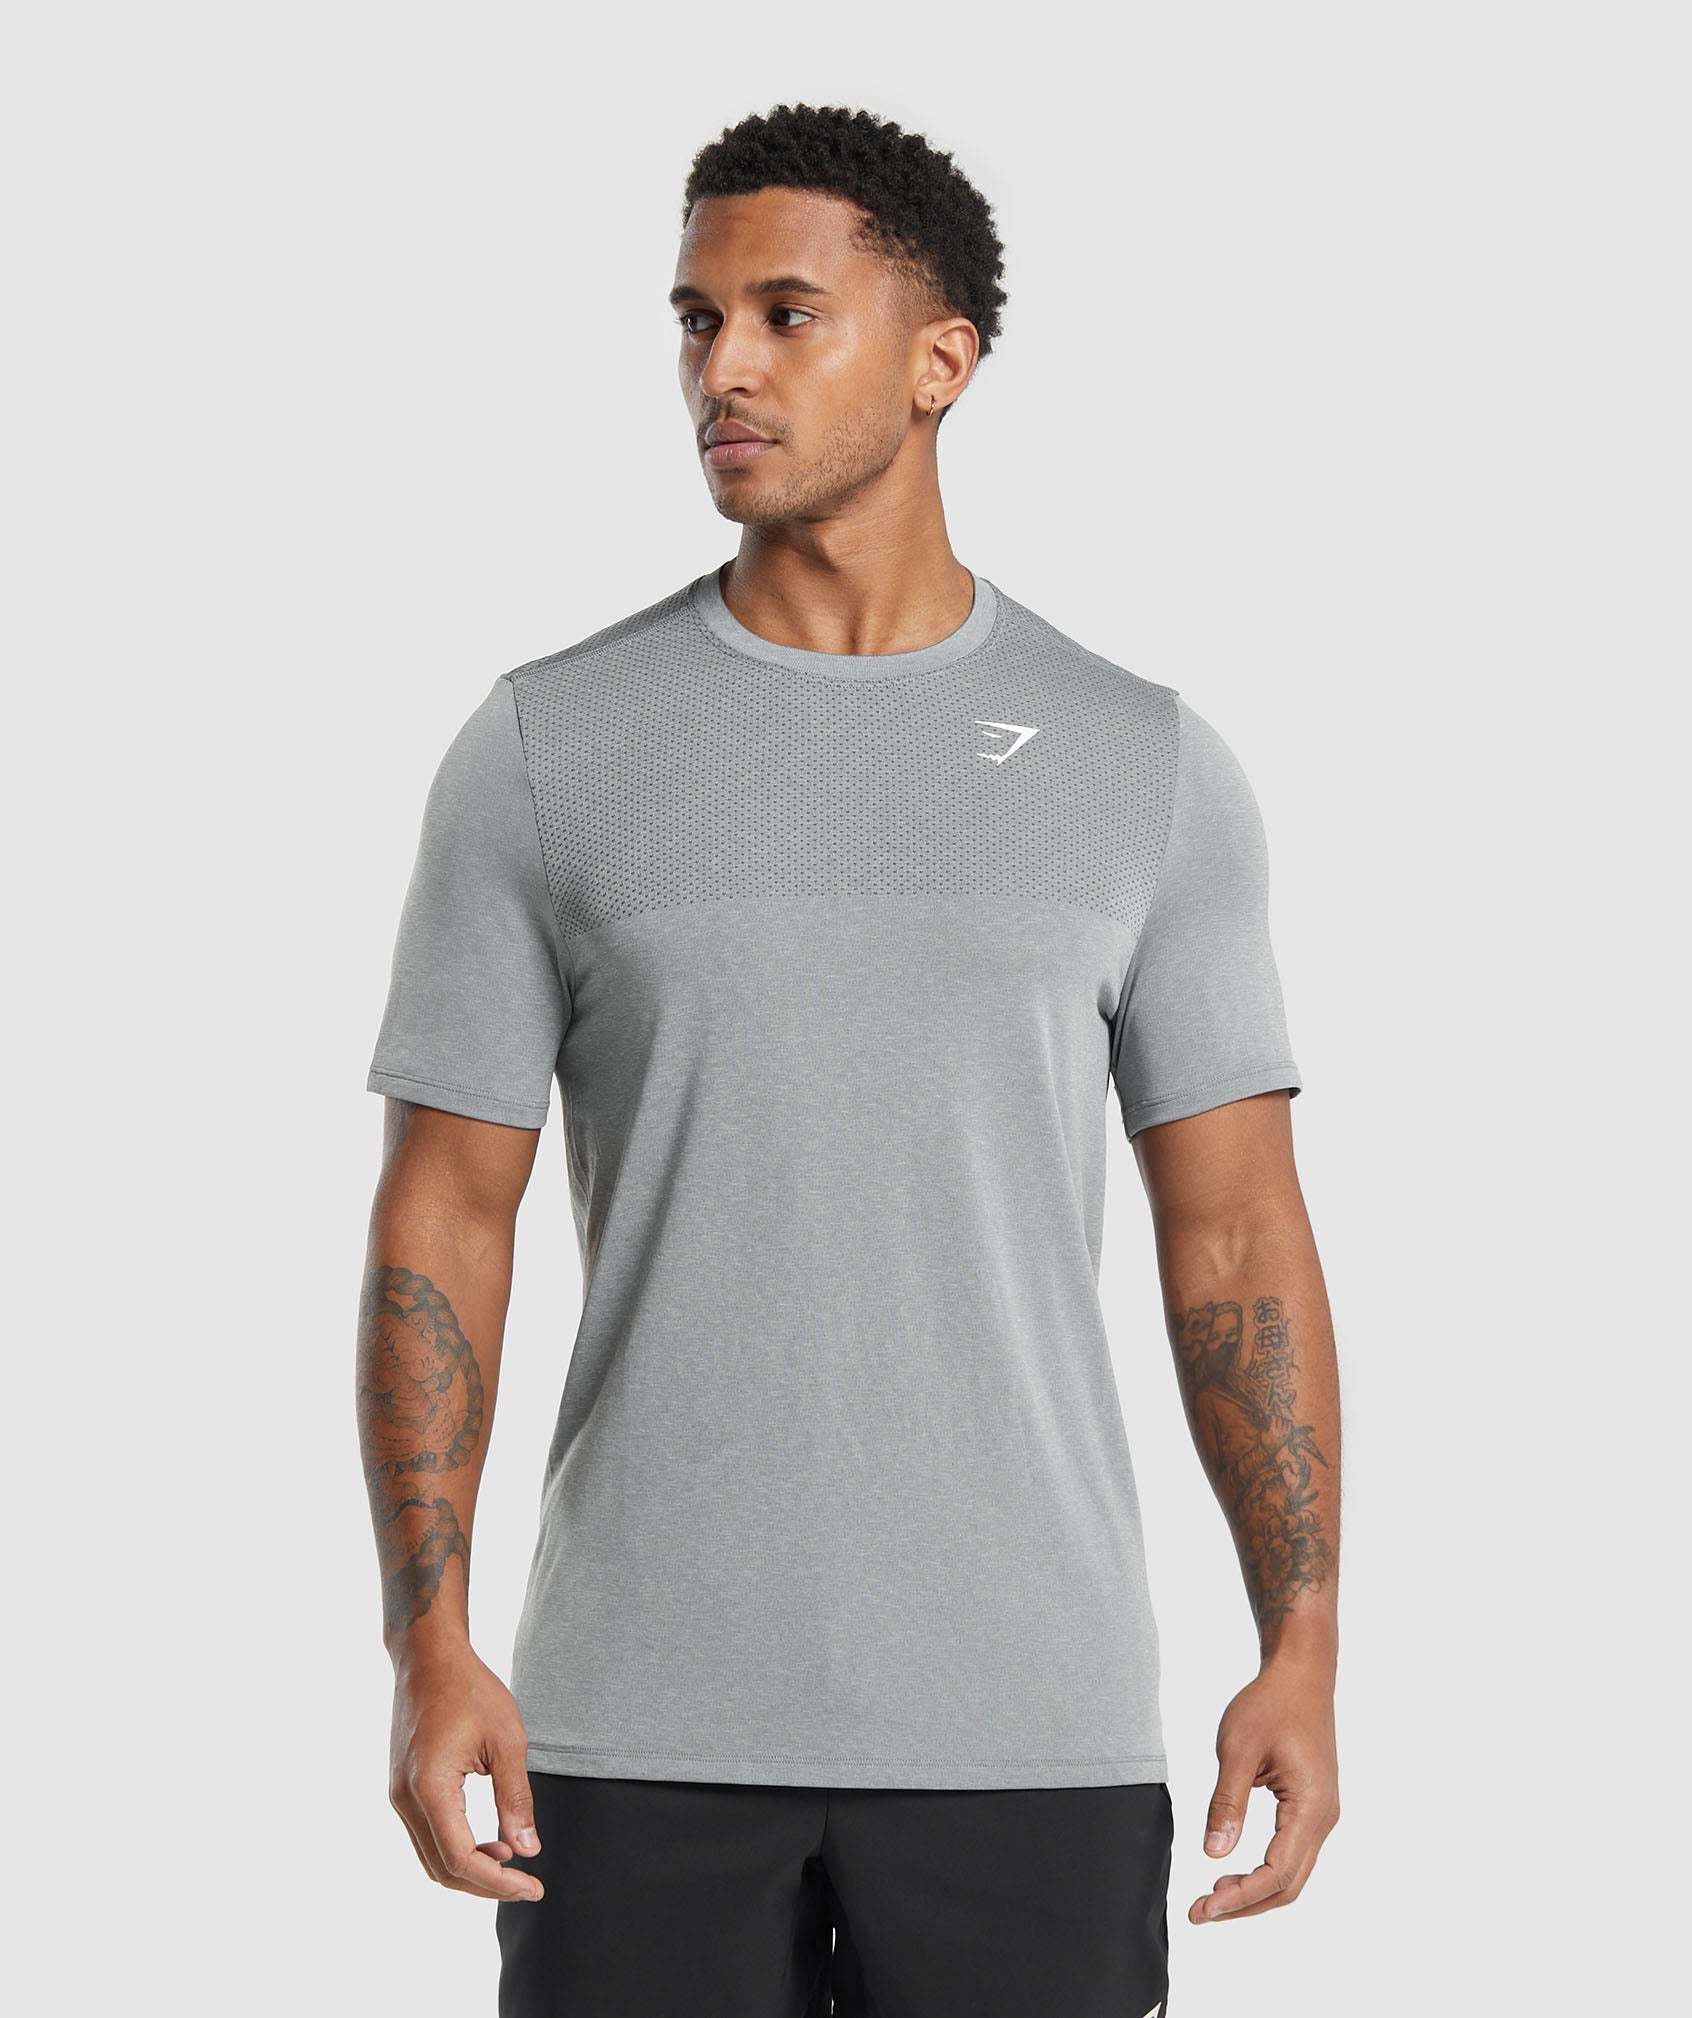 Vital Seamless T-Shirt in Light Grey/Black Marl